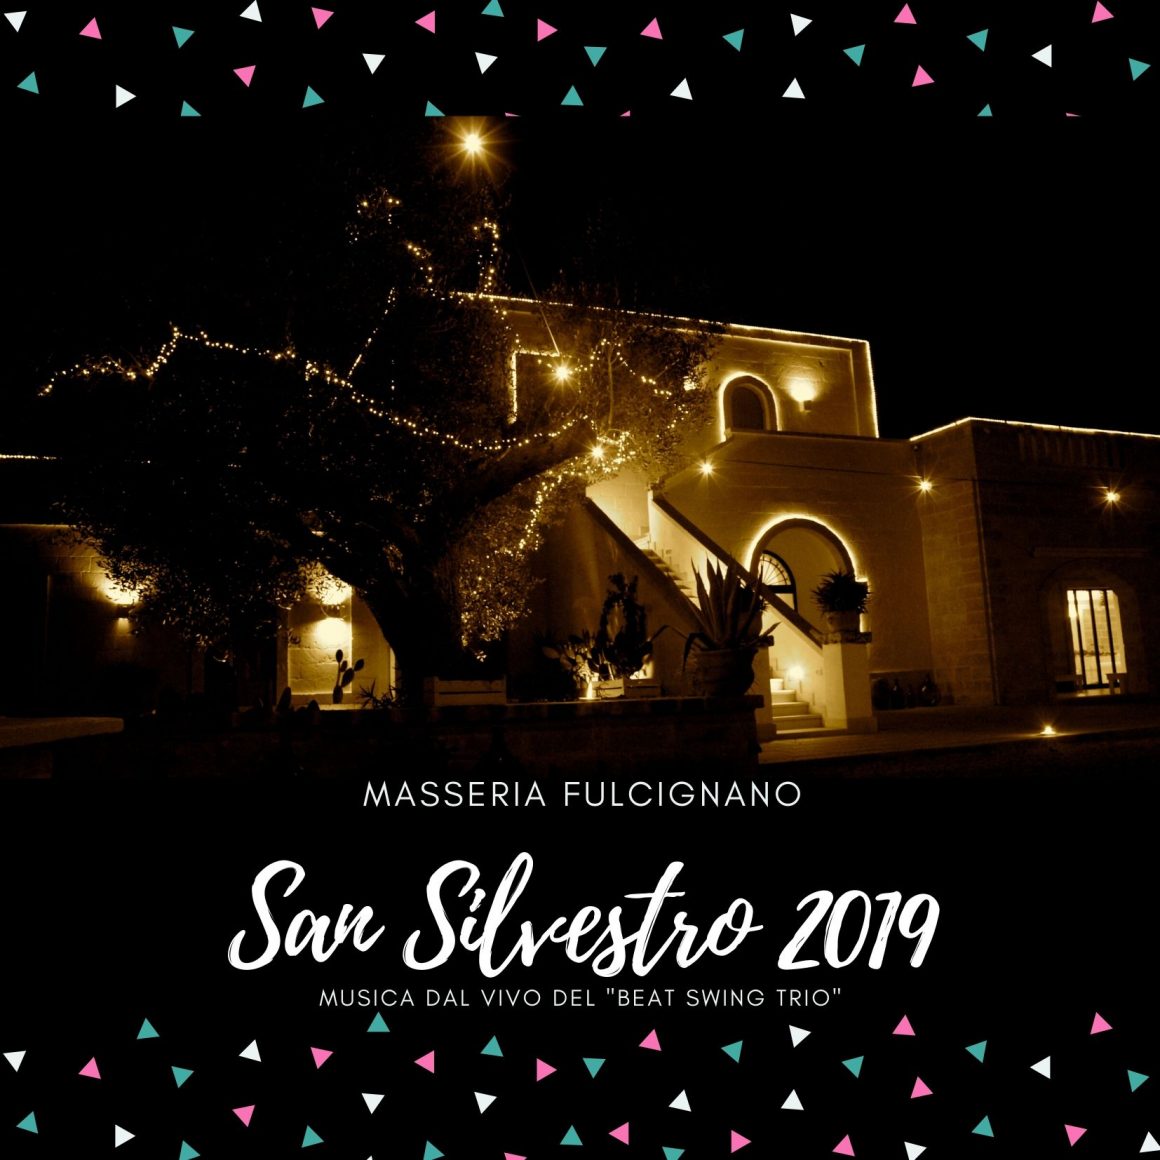 San Silvestro 2019